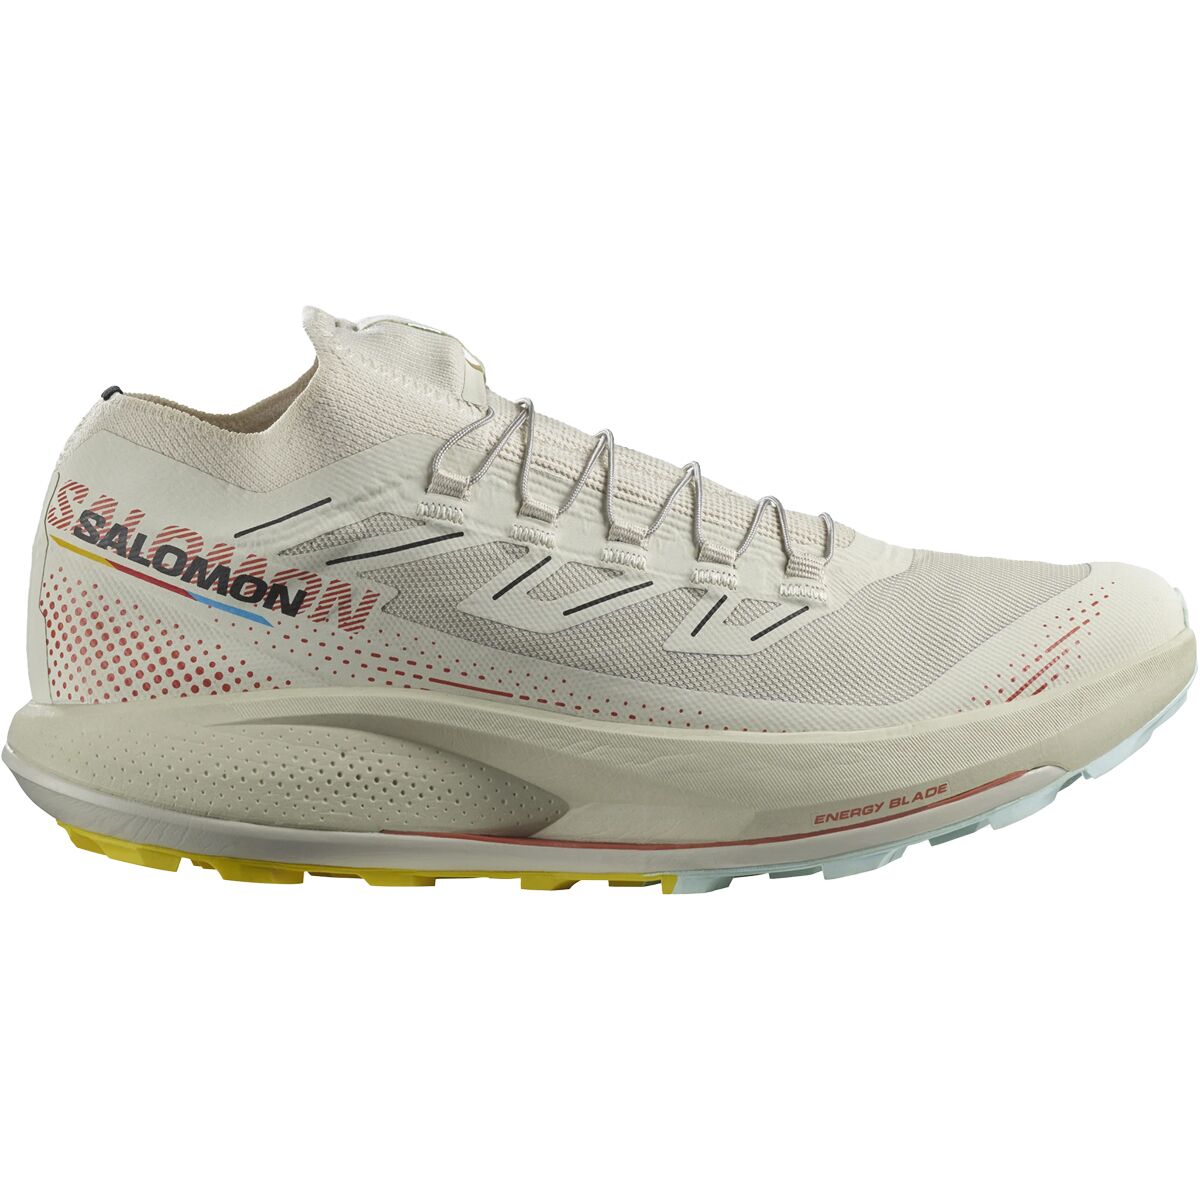 S/Lab Pulsar Pro Trail Running Shoe - Men